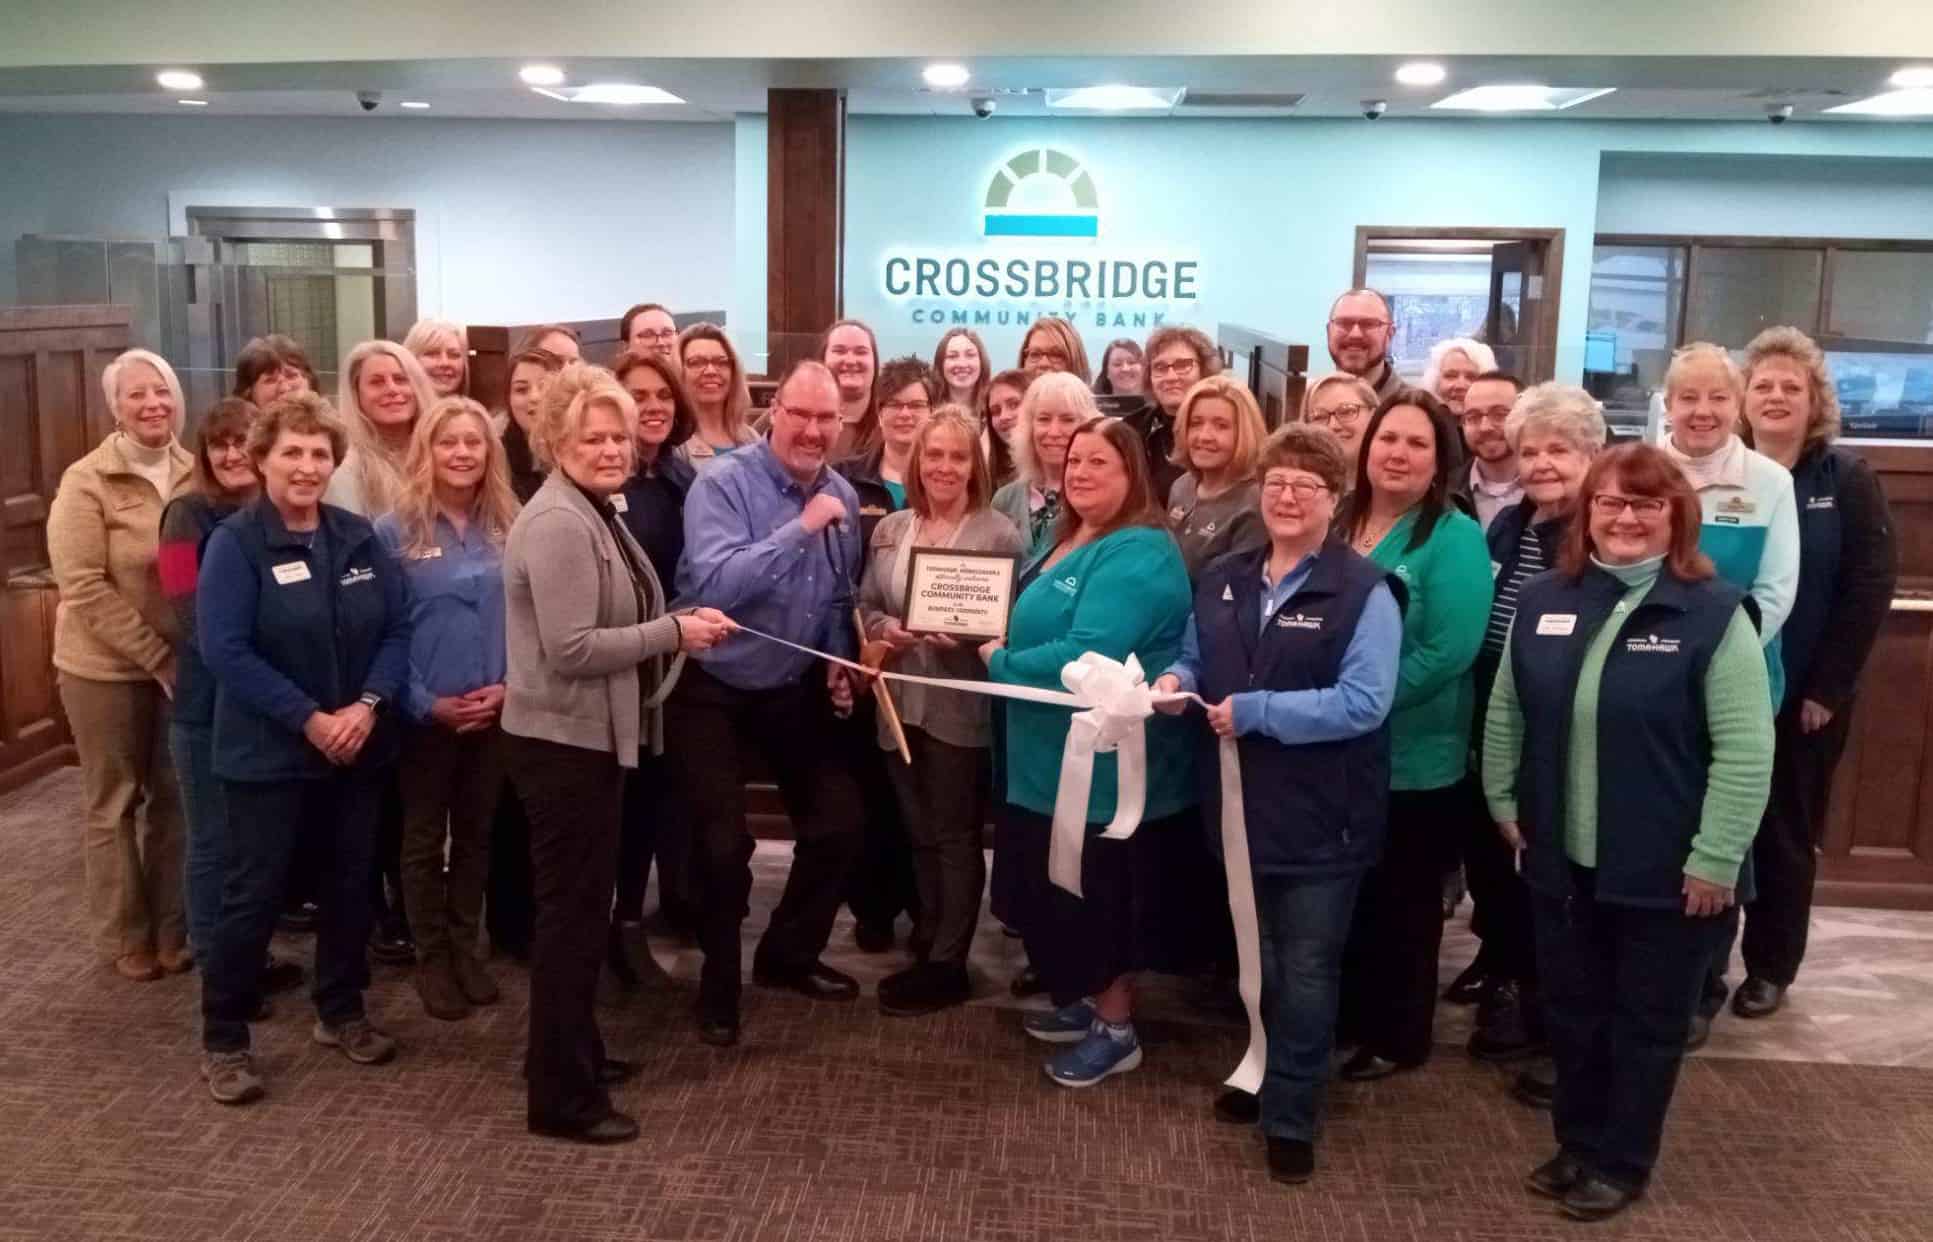 Chamber Ambassadors welcome recently-rebranded Crossbridge to community